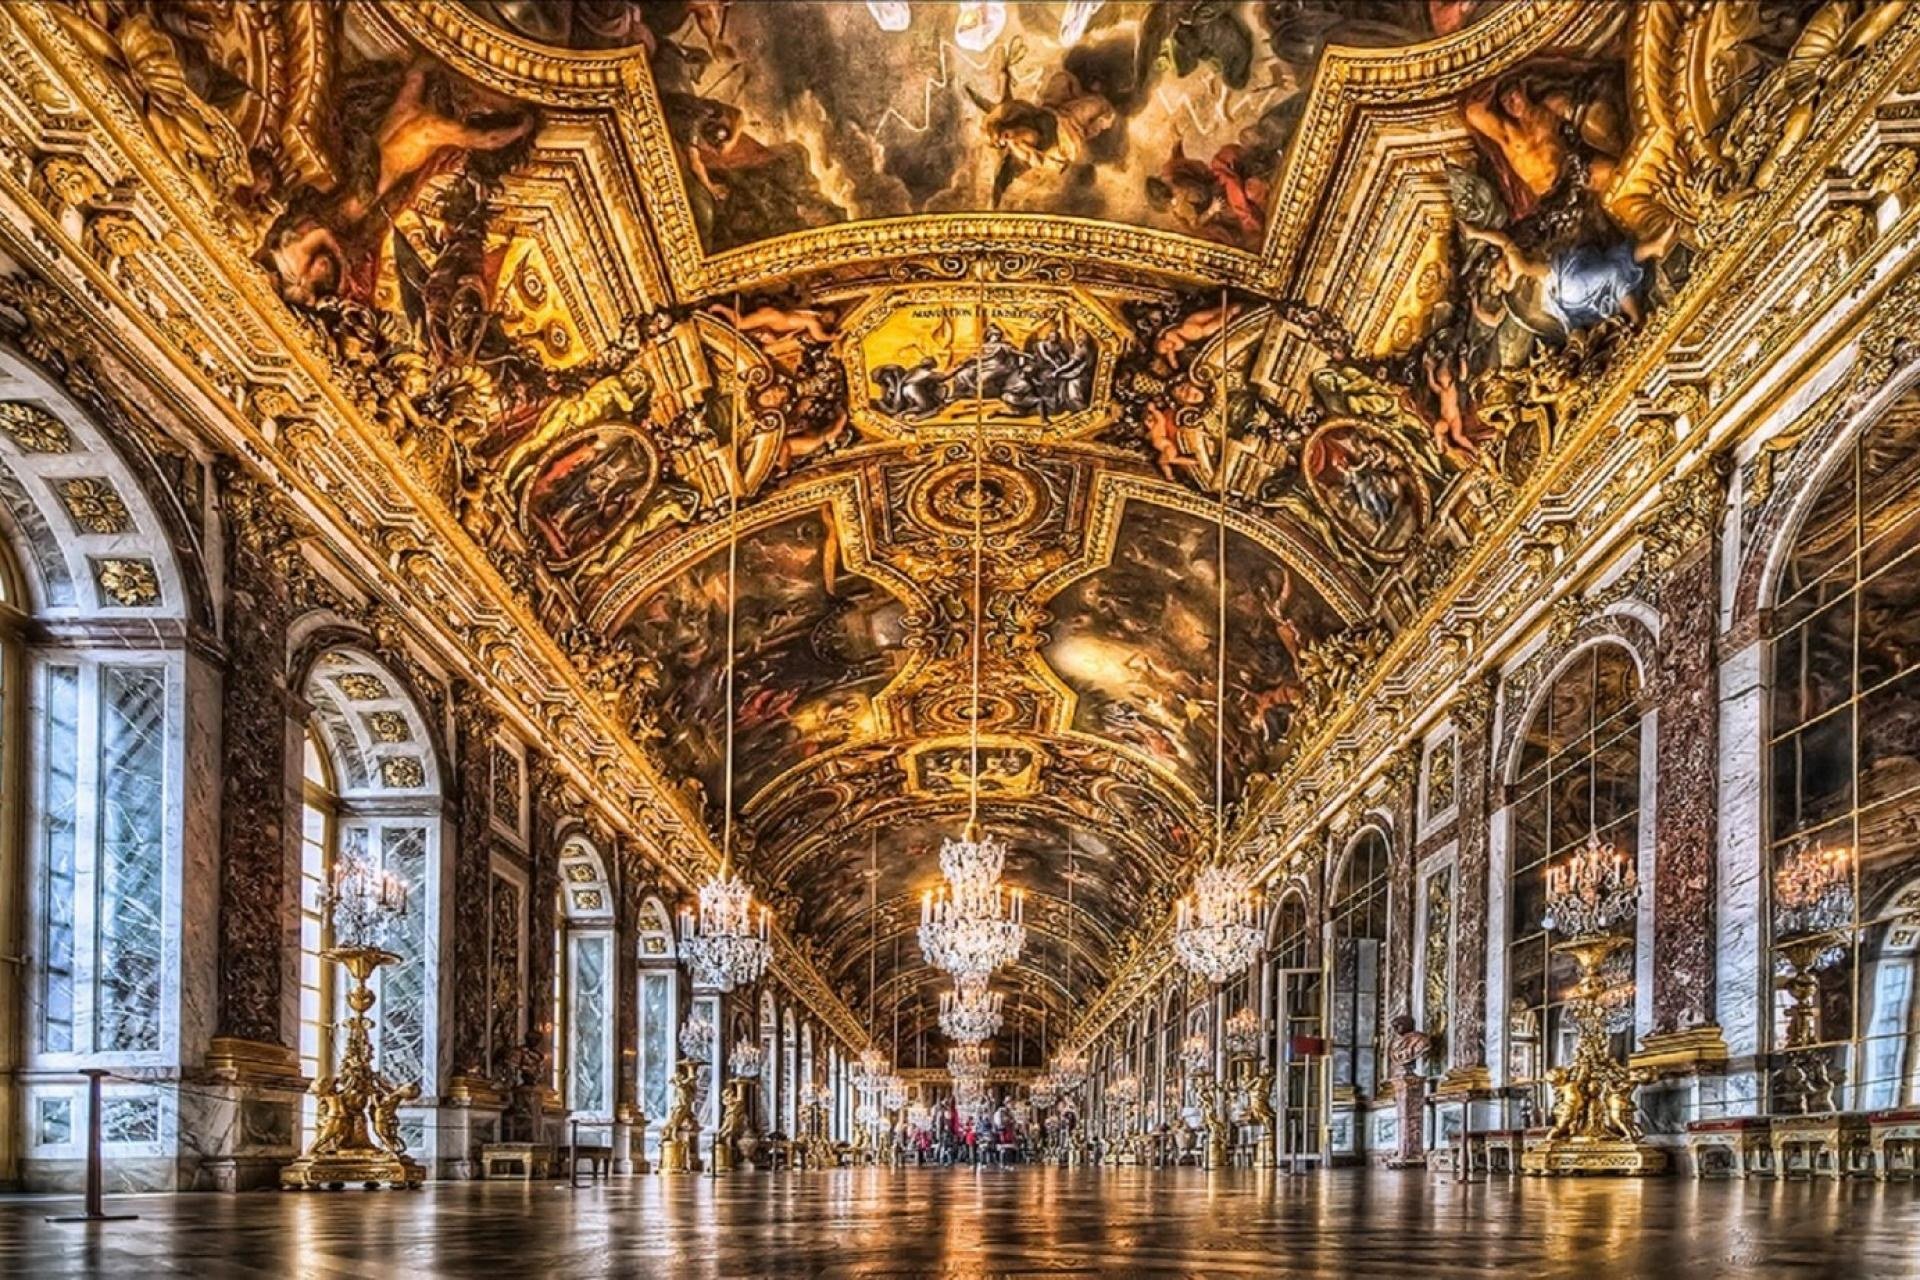 Hall o. Версальский дворец Версаль стиль Барокко. Дворец Уффици во Флоренции. Версальский дворец Версаль Франция внутри. Галерея Уффици Флоренция Италия.